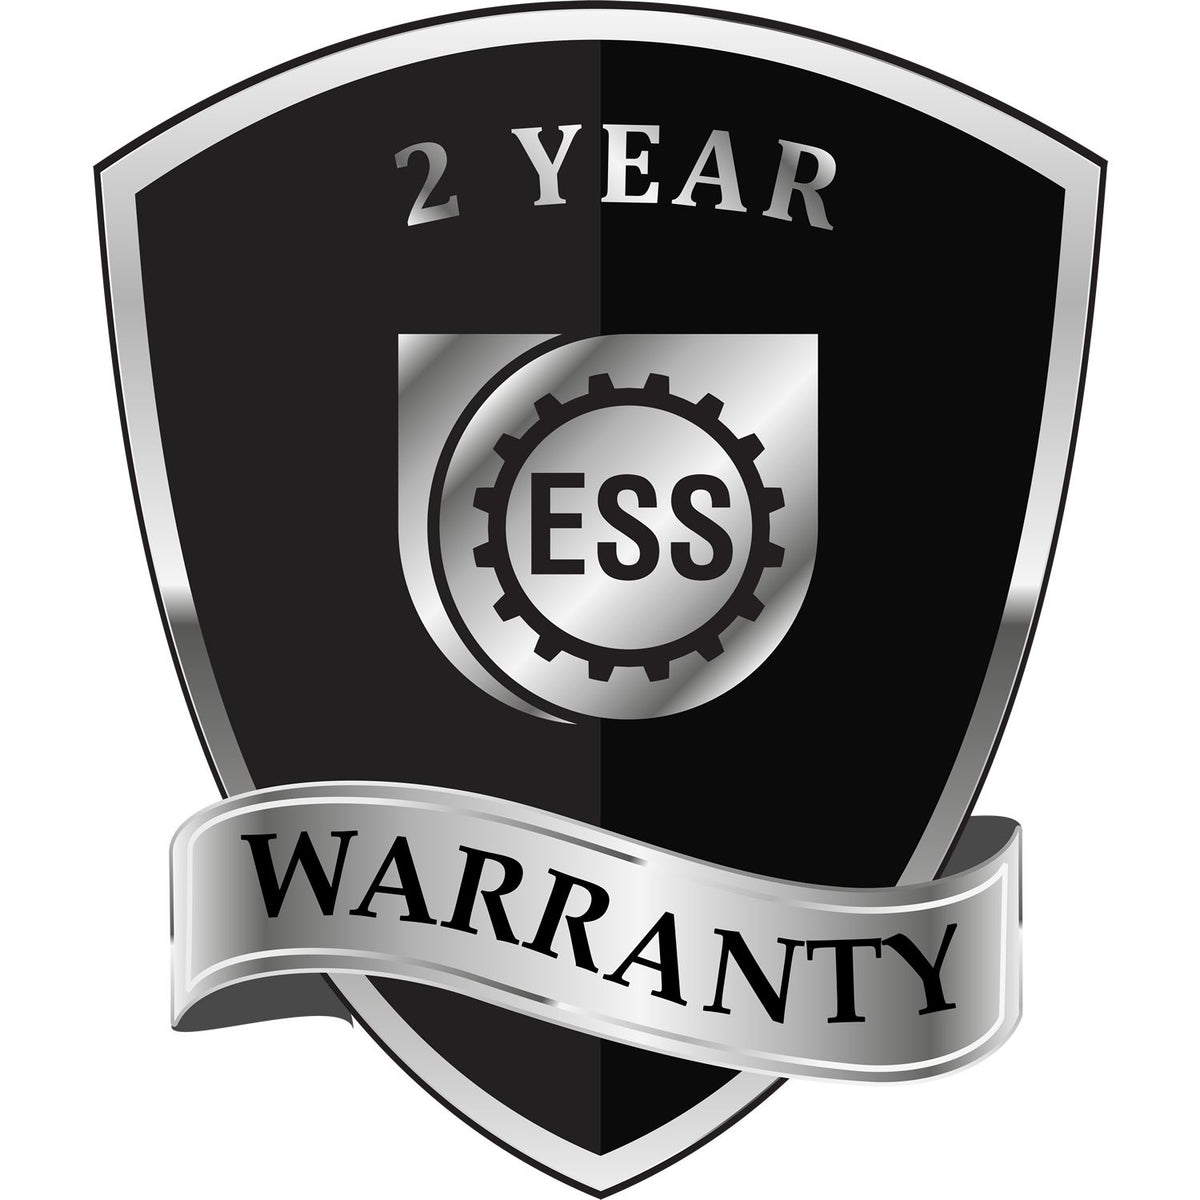 A black and silver badge or emblem showing warranty information for the Hybrid Florida Landscape Architect Seal